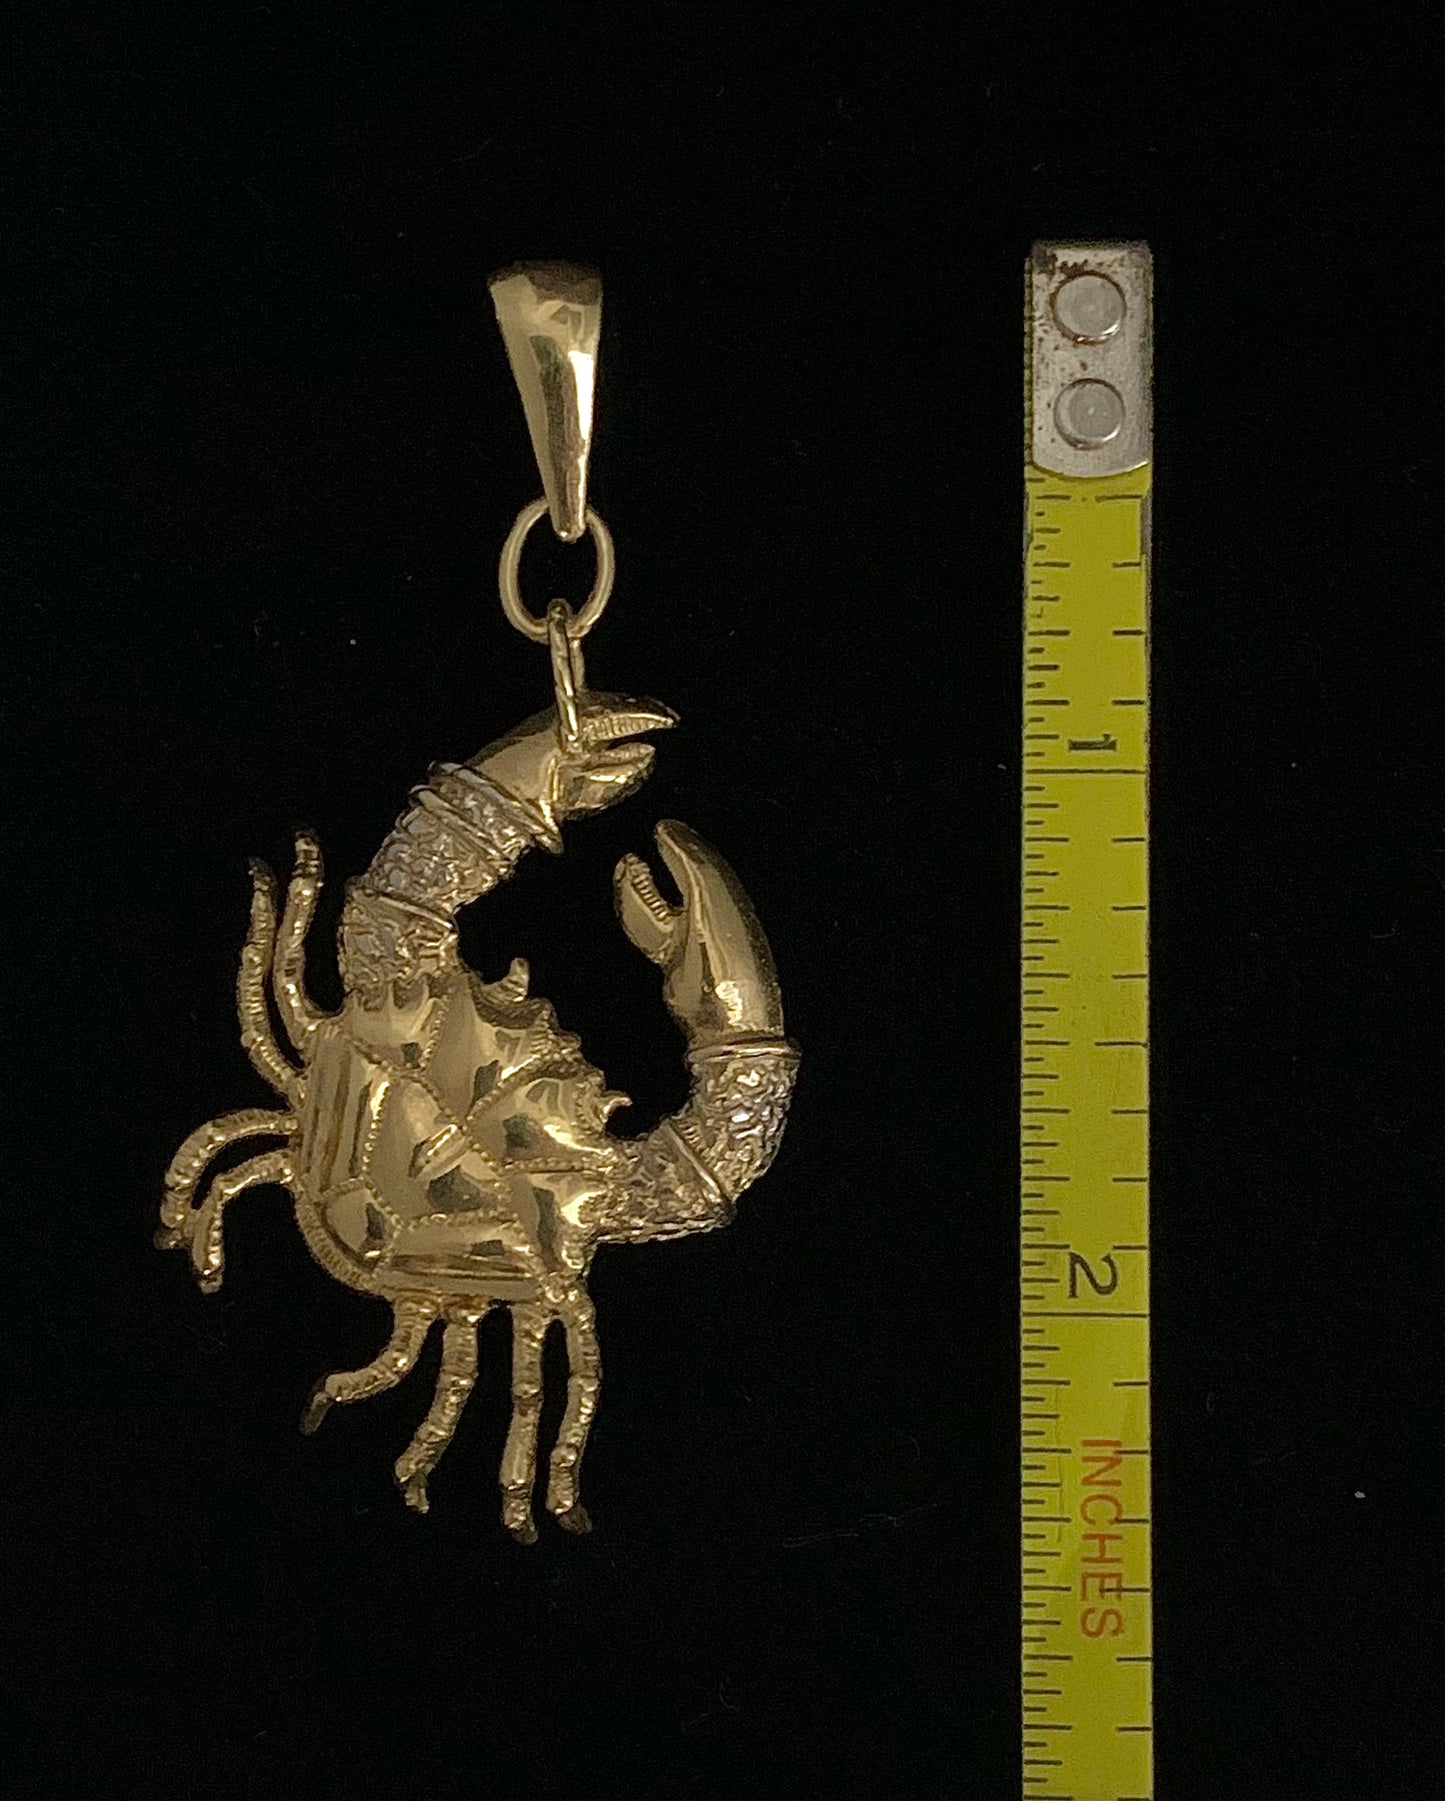 Crab Pendant - Large.